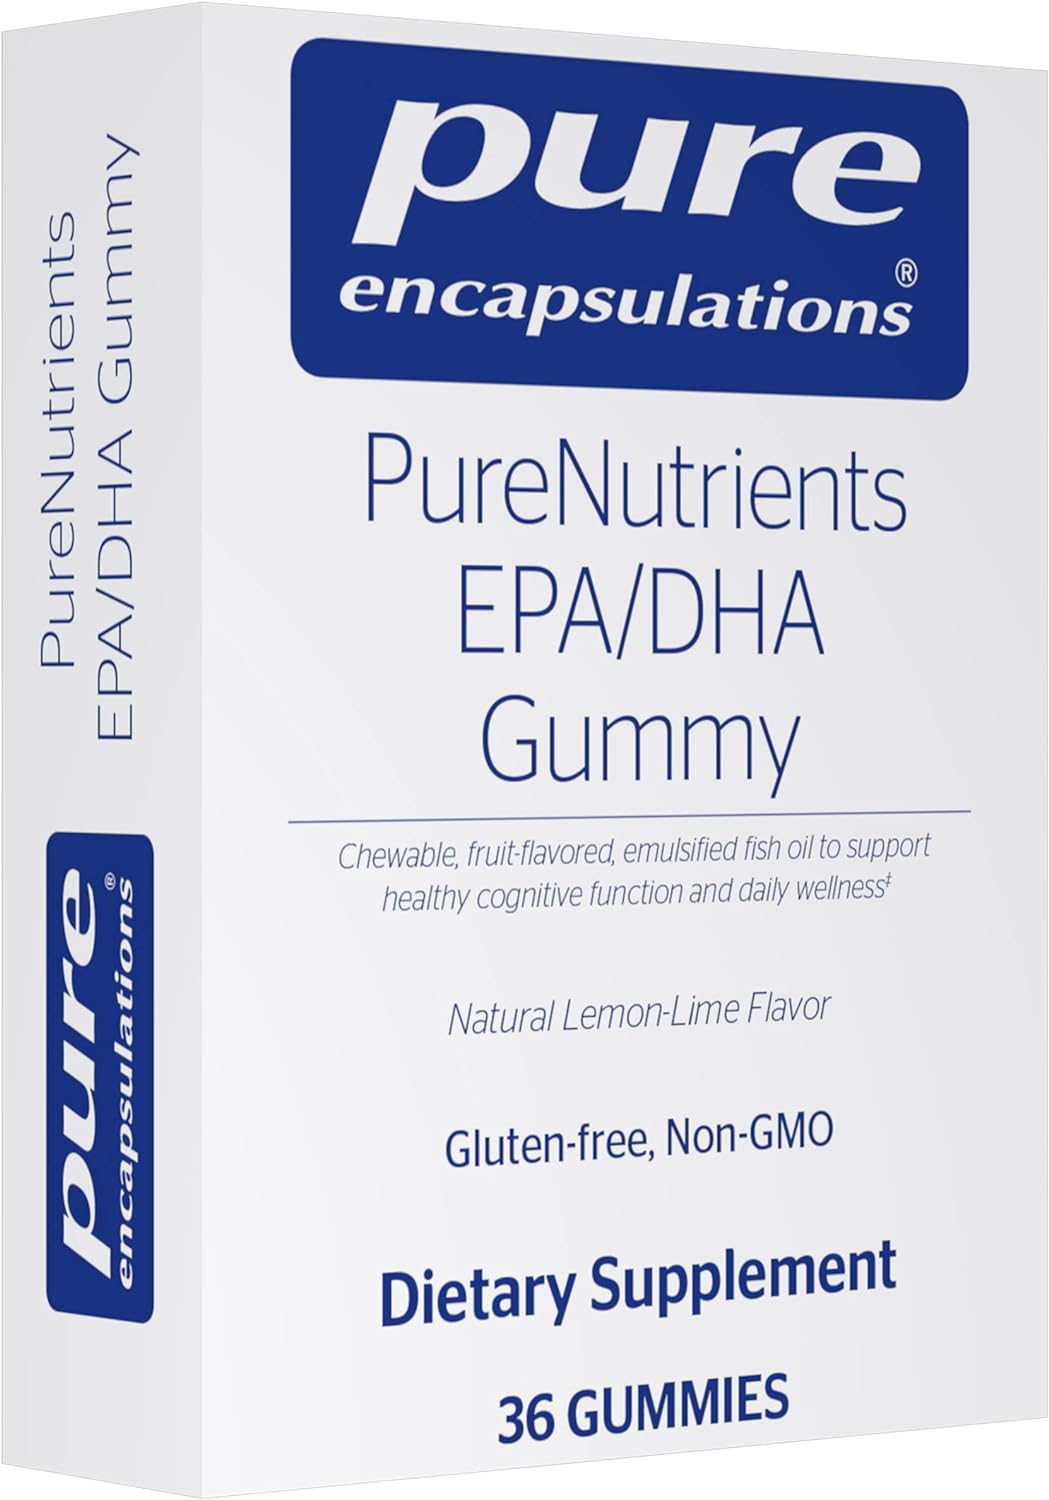 Pure Encapsulations PureNutrients EPA/DHA Gummy | Gummy Soft Chew to S